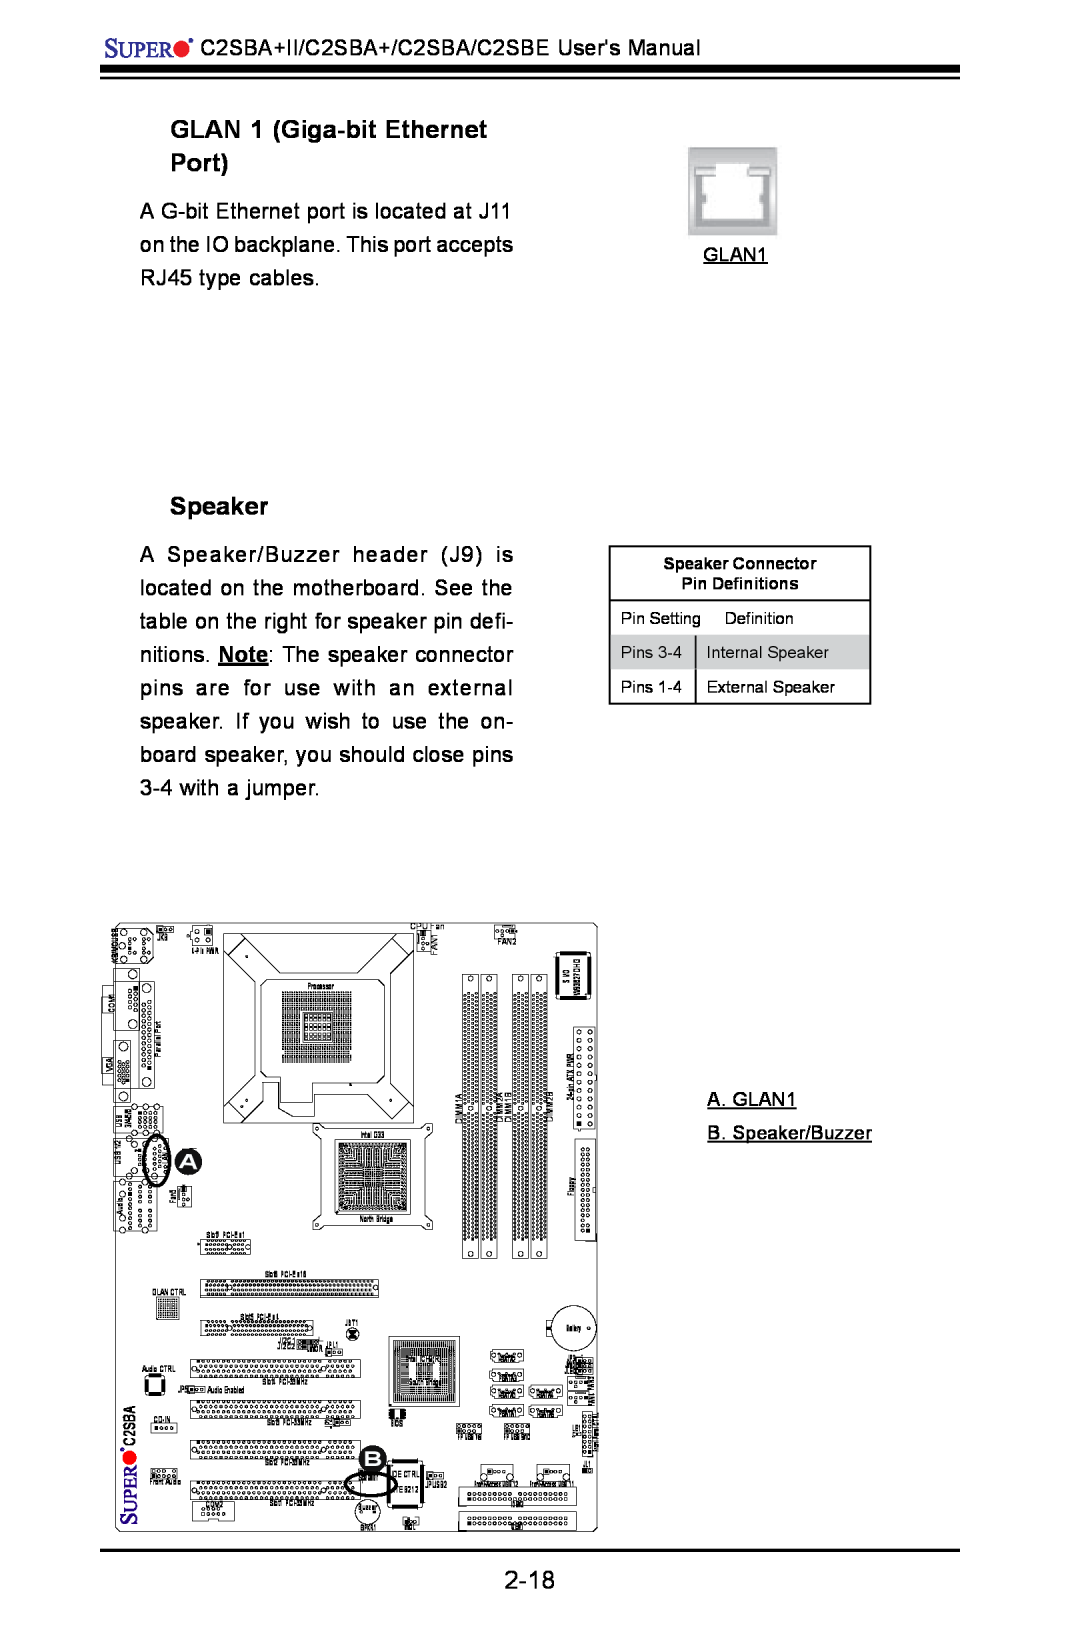 SUPER MICRO Computer C2SBE, C2SBA+II user manual GLAN 1 Giga-bit Ethernet Port, A. GLAN1 B. Speaker/Buzzer 